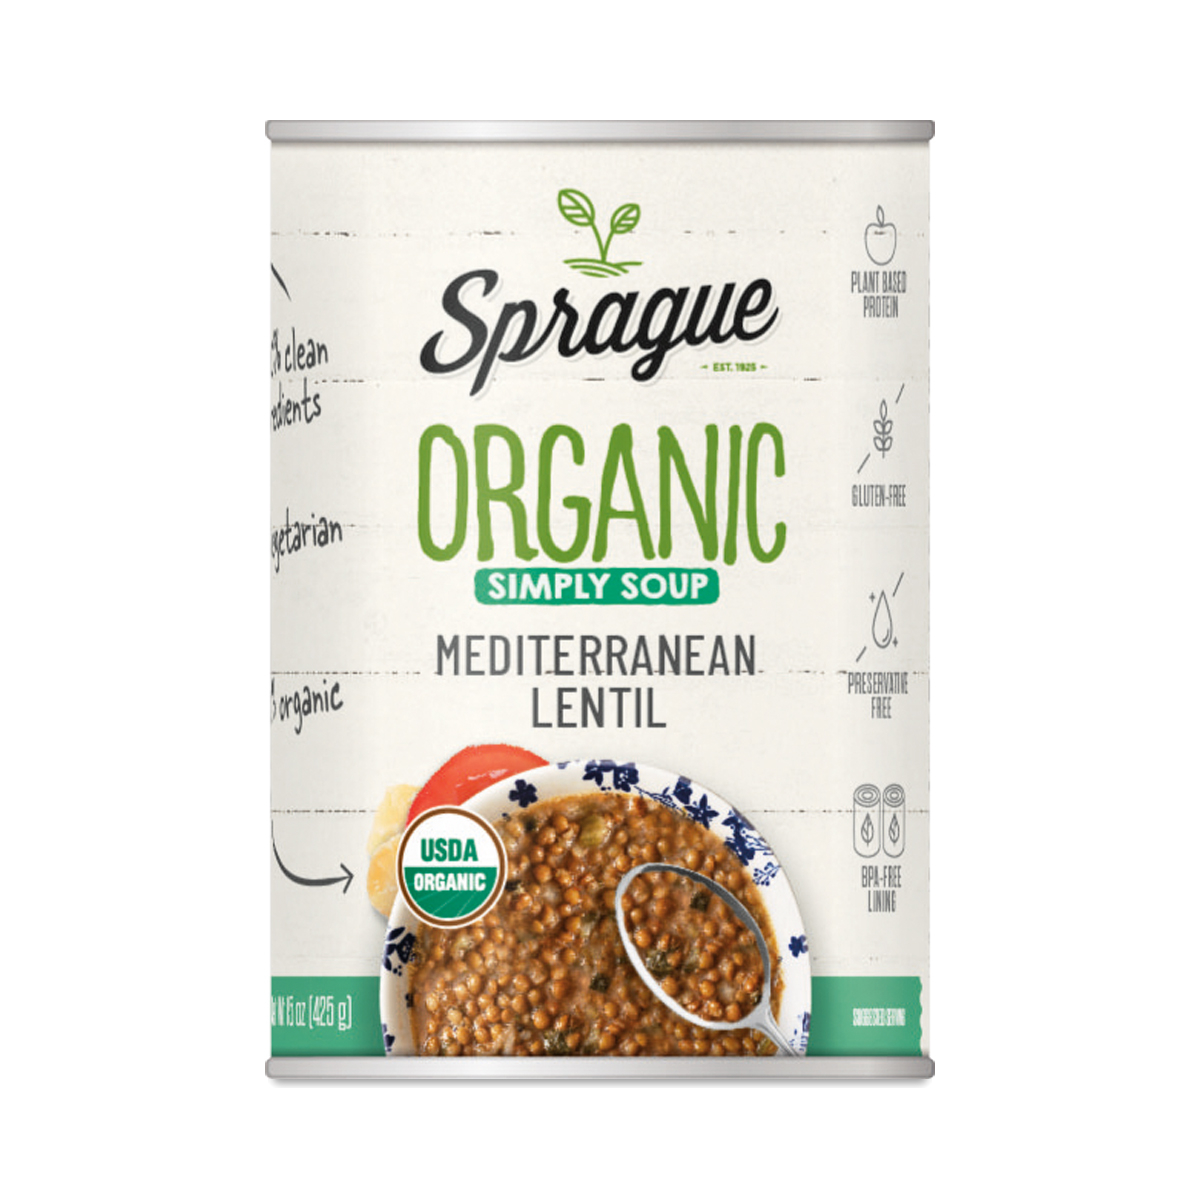 Sprague Organic Mediterranean Lentil Soup 15 oz can